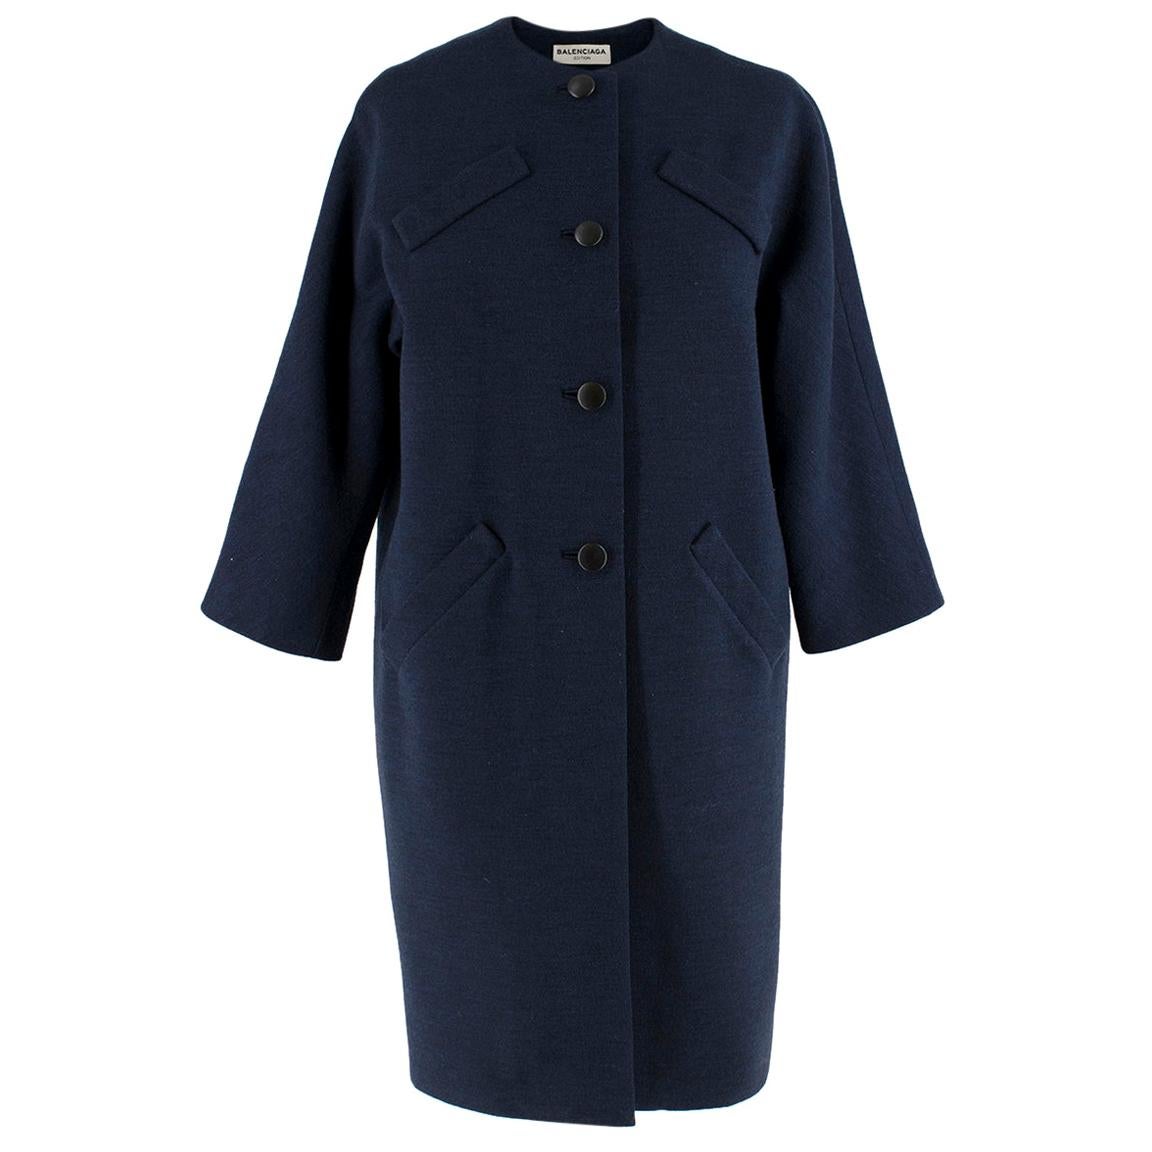 Balenciaga Navy Blue Wool Single-Breasted Coat 34 (FR)